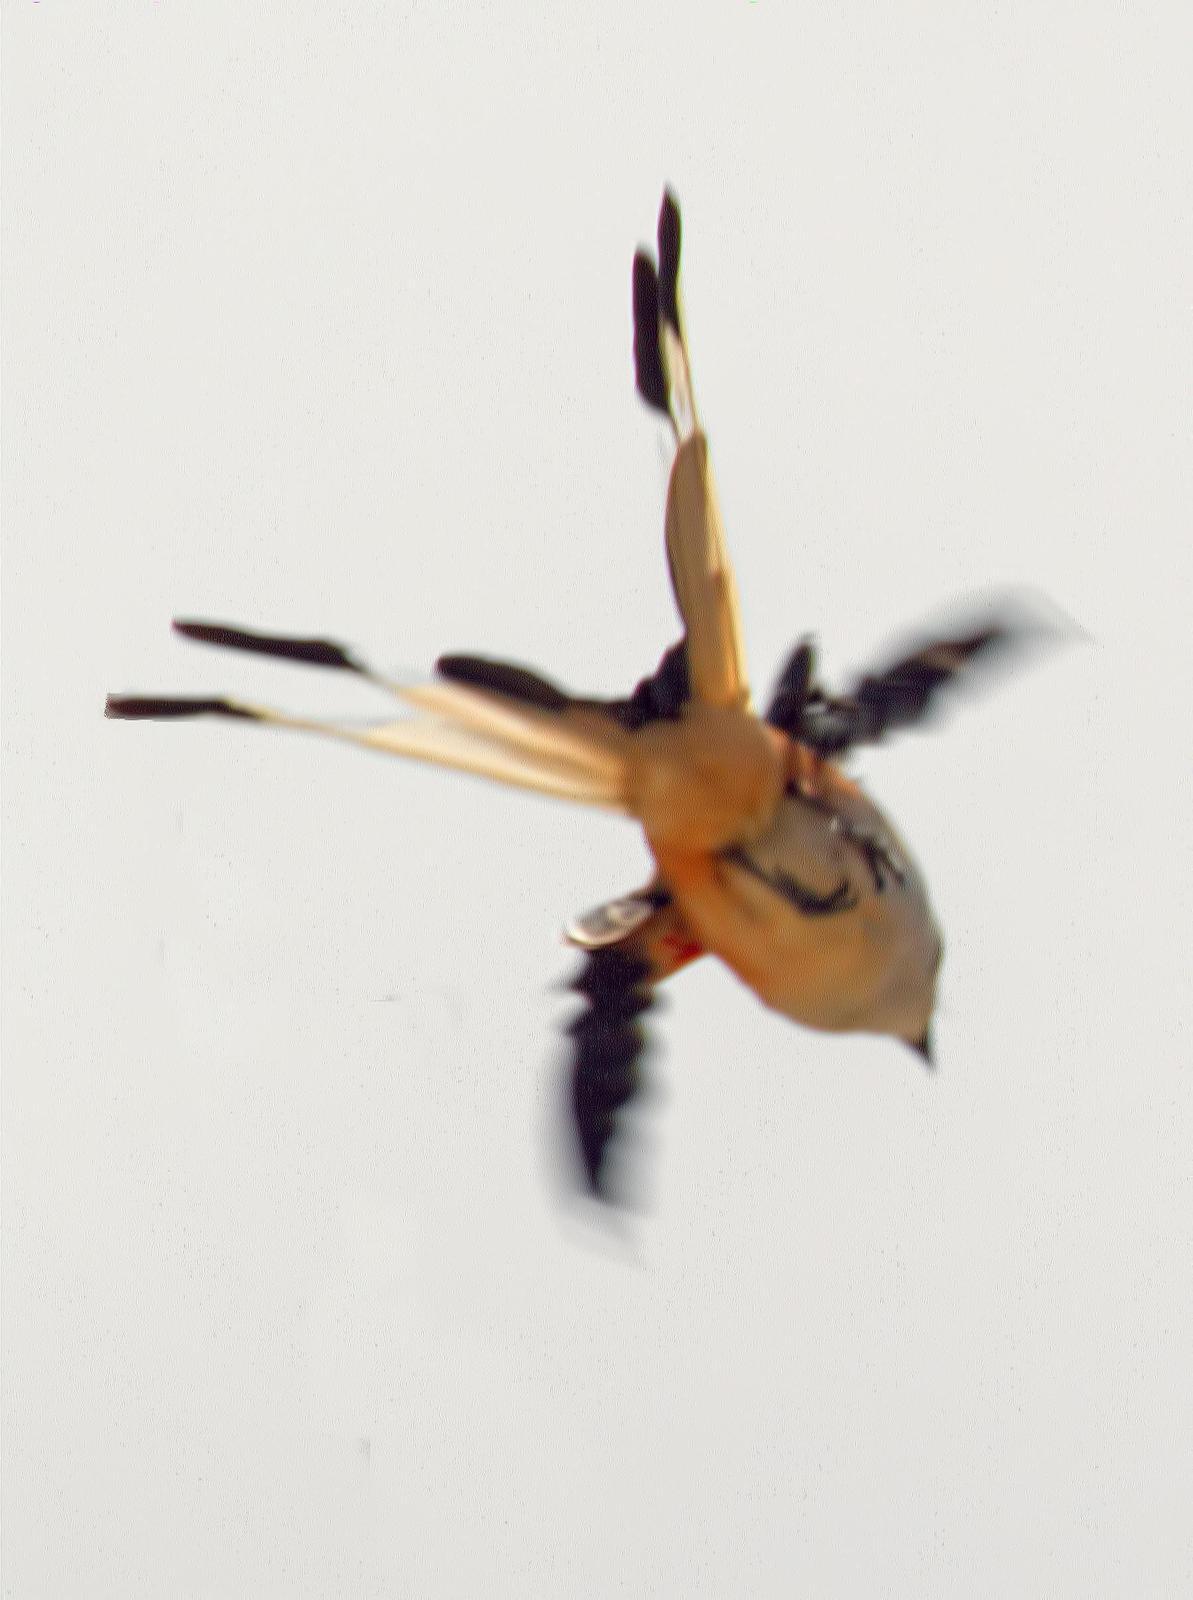 Scissor-tailed Flycatcher Photo by Dan Tallman